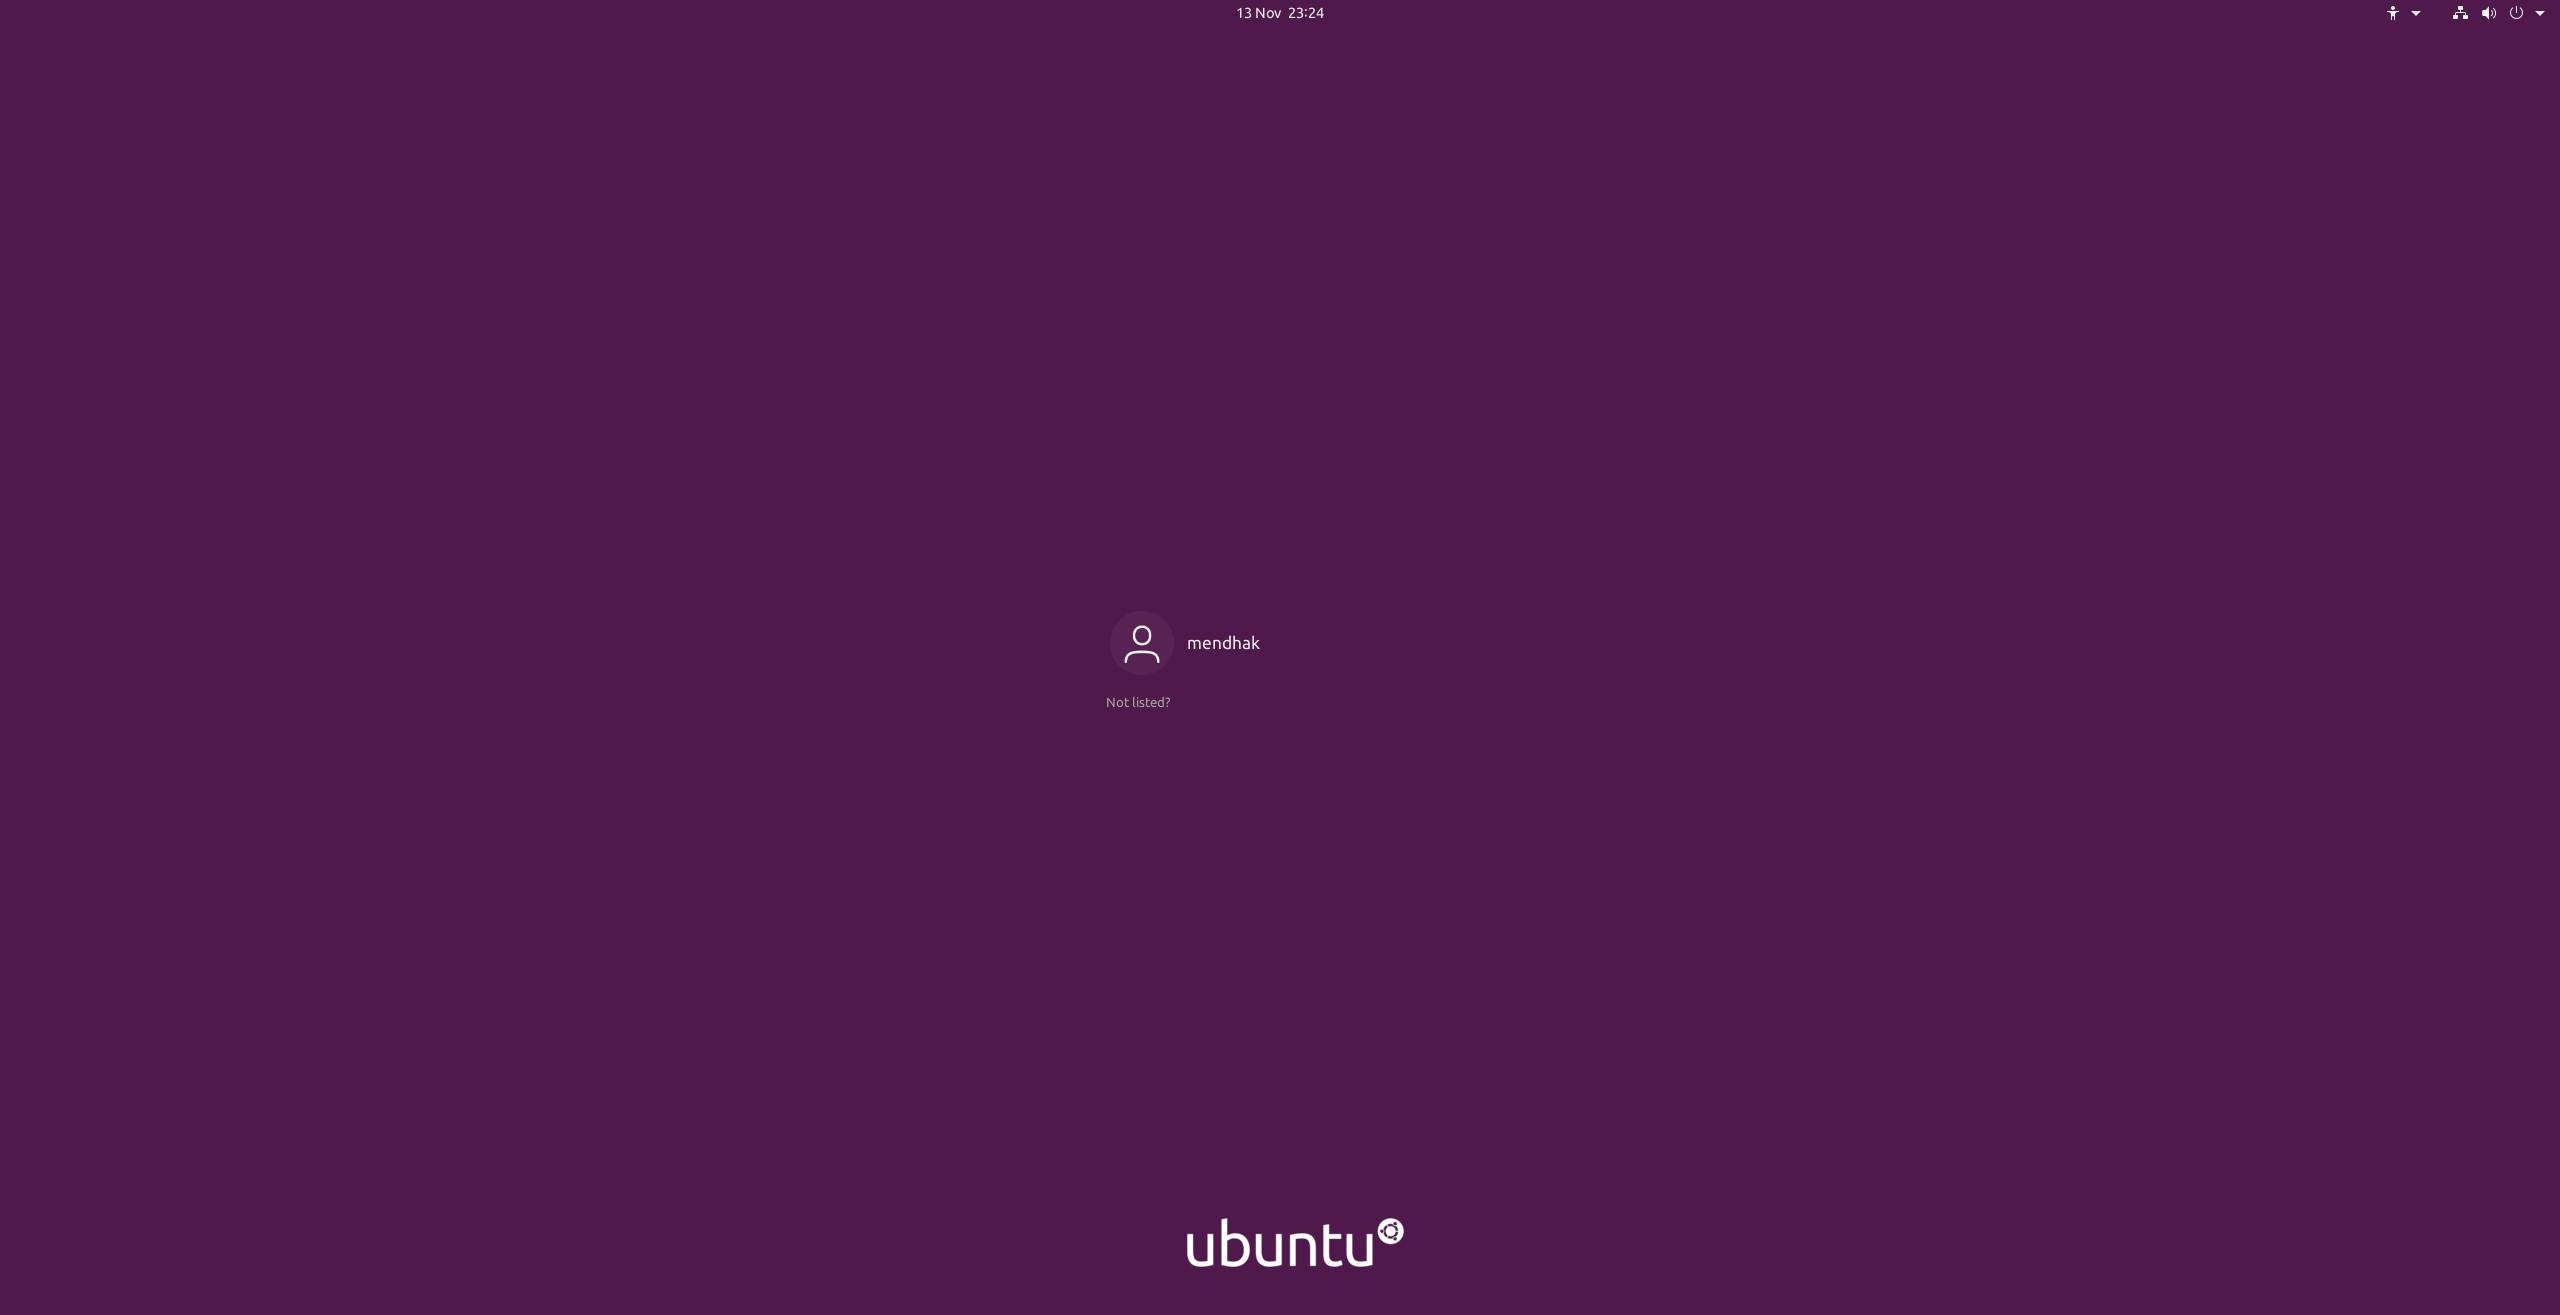 Syncing the login wallpaper with the desktop wallpaper on Ubuntu 